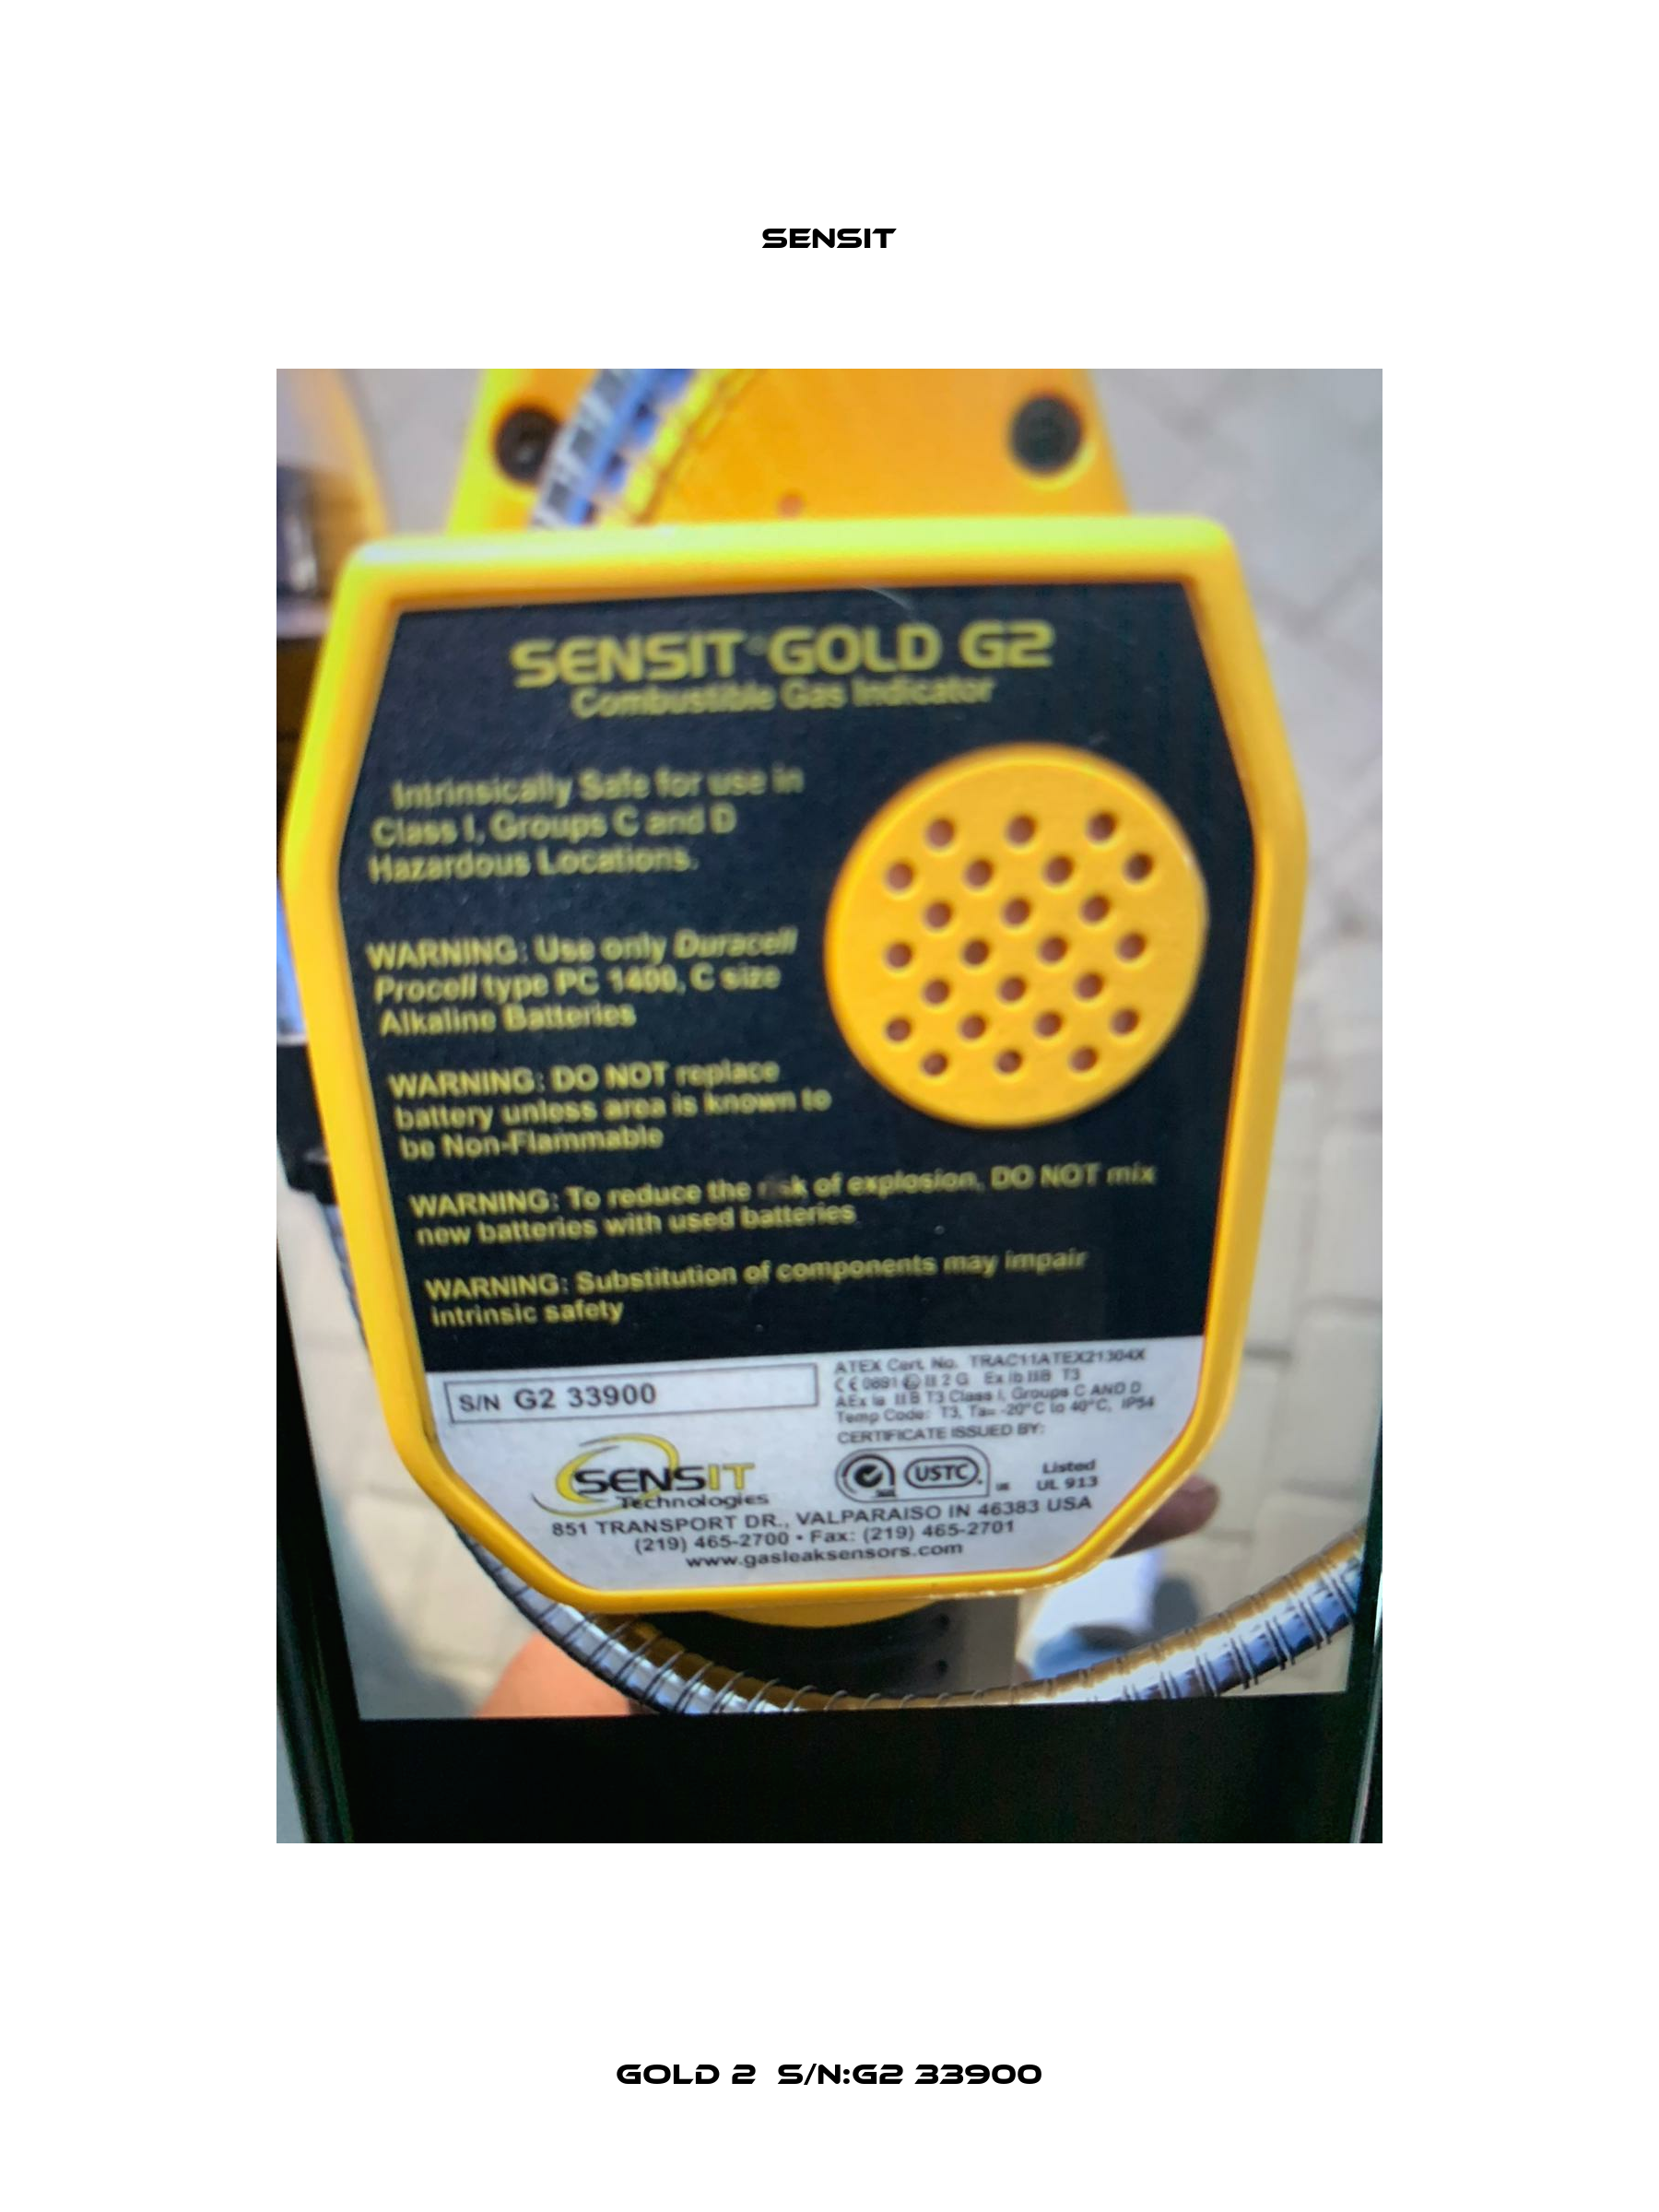 GOLD 2  S/N:G2 33900 Sensit